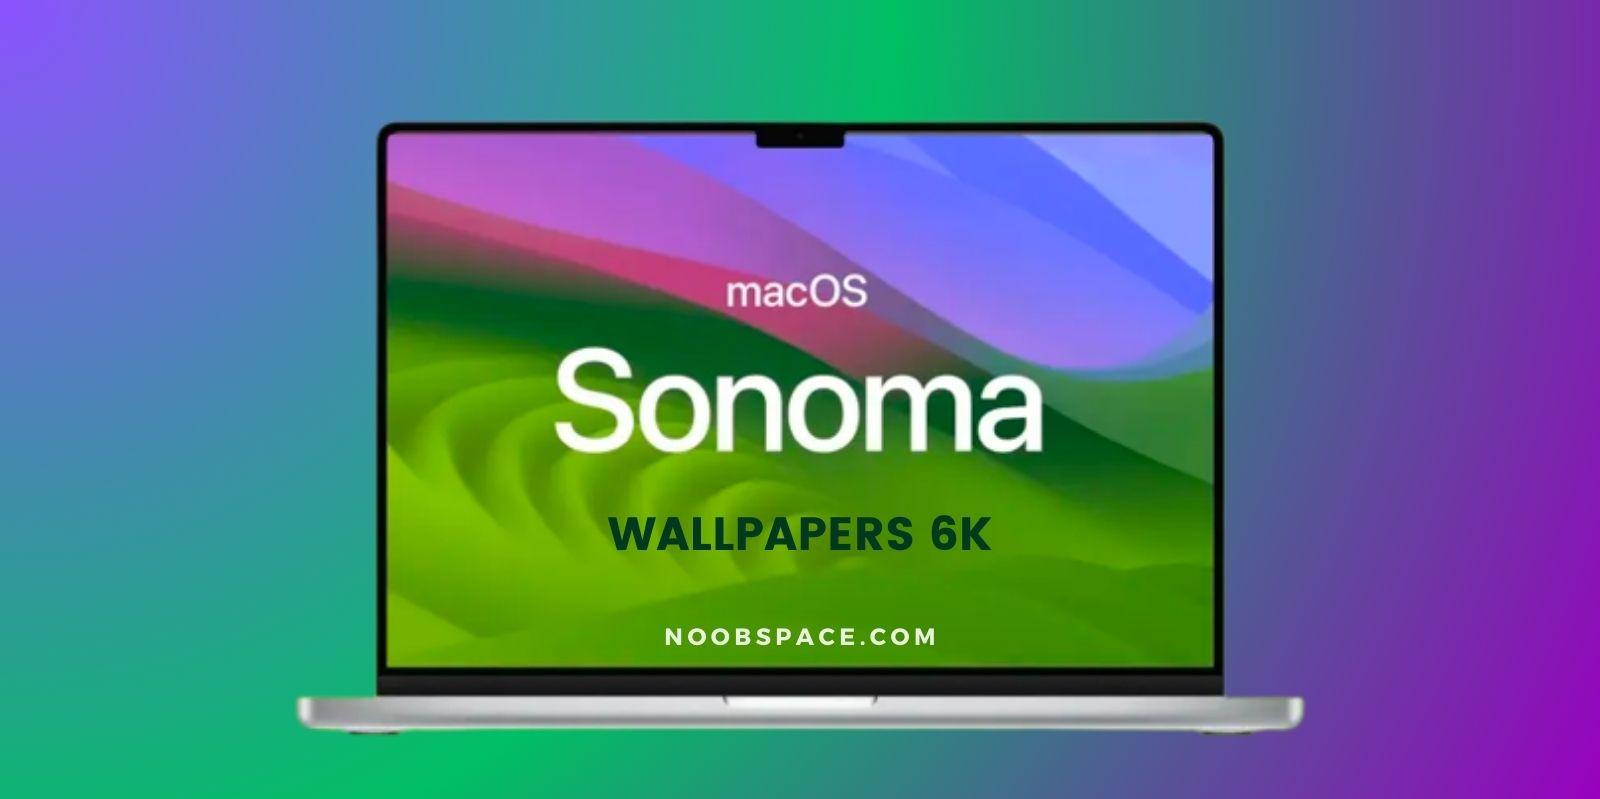 Macos Sonoma Wallpaper In 6k Noobspace